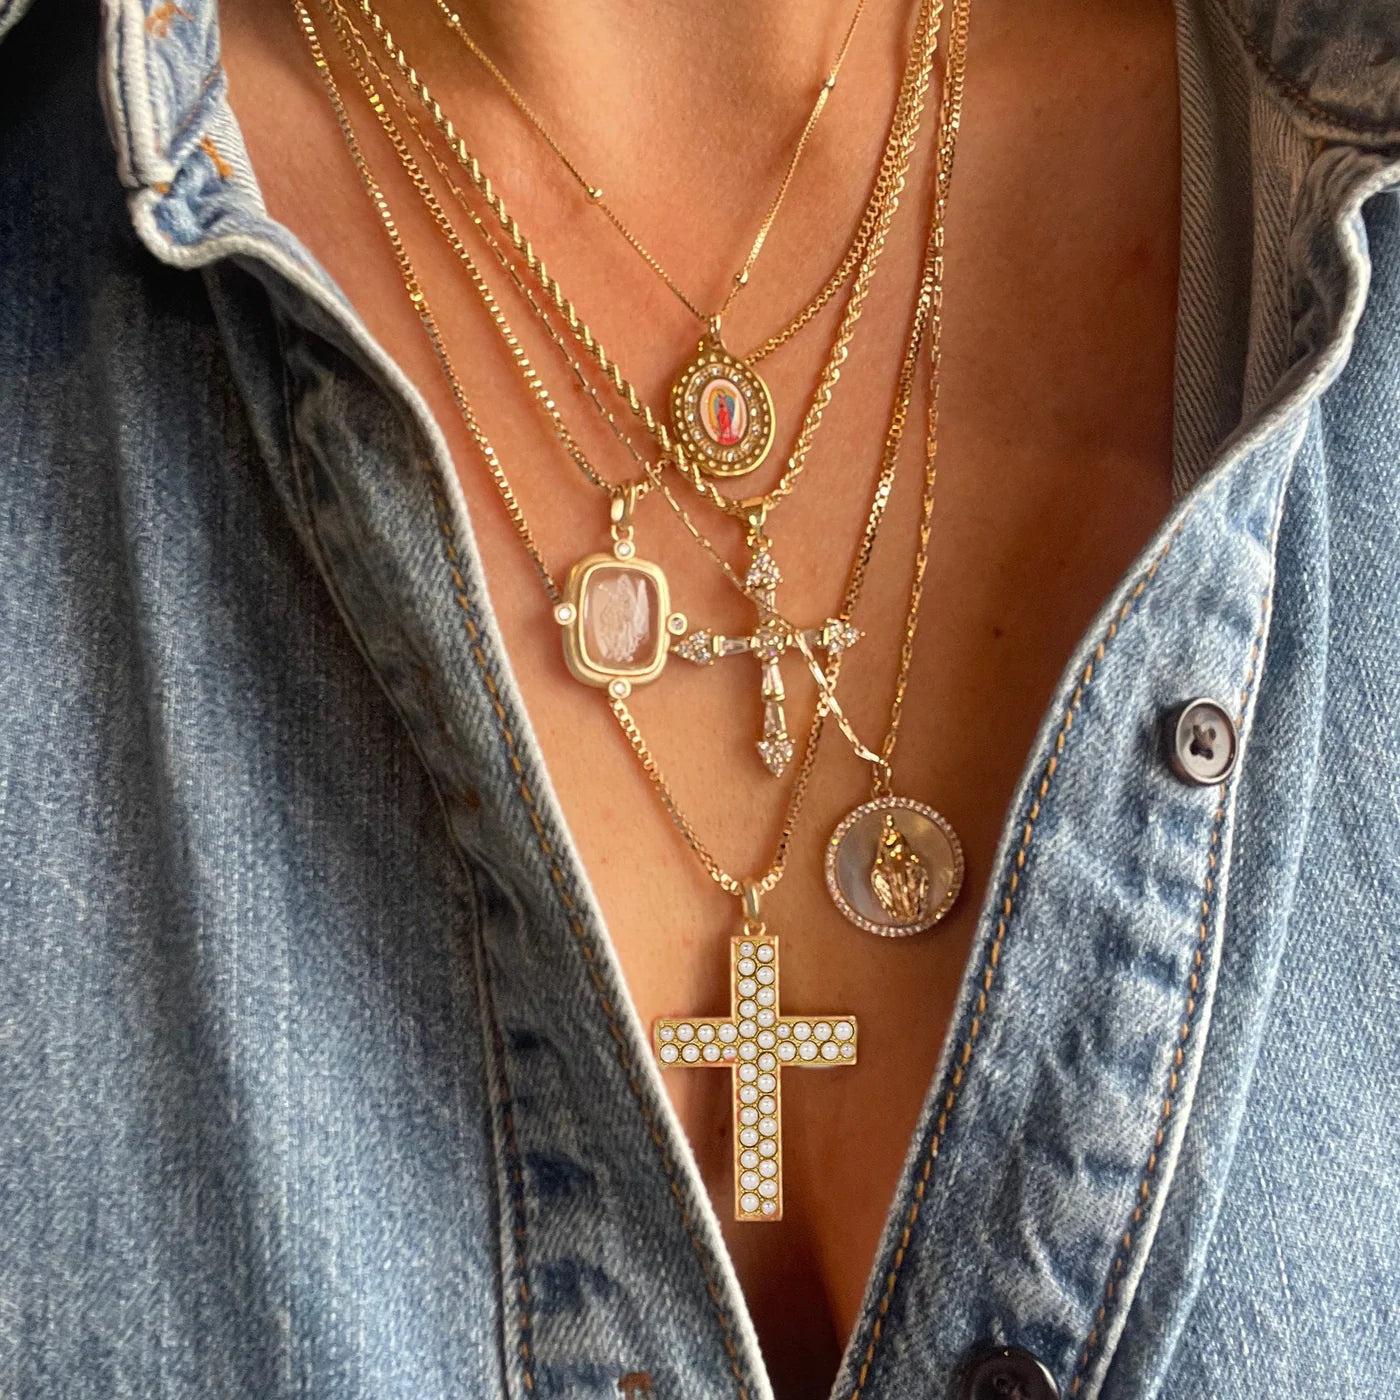 Elpis Cross Necklace